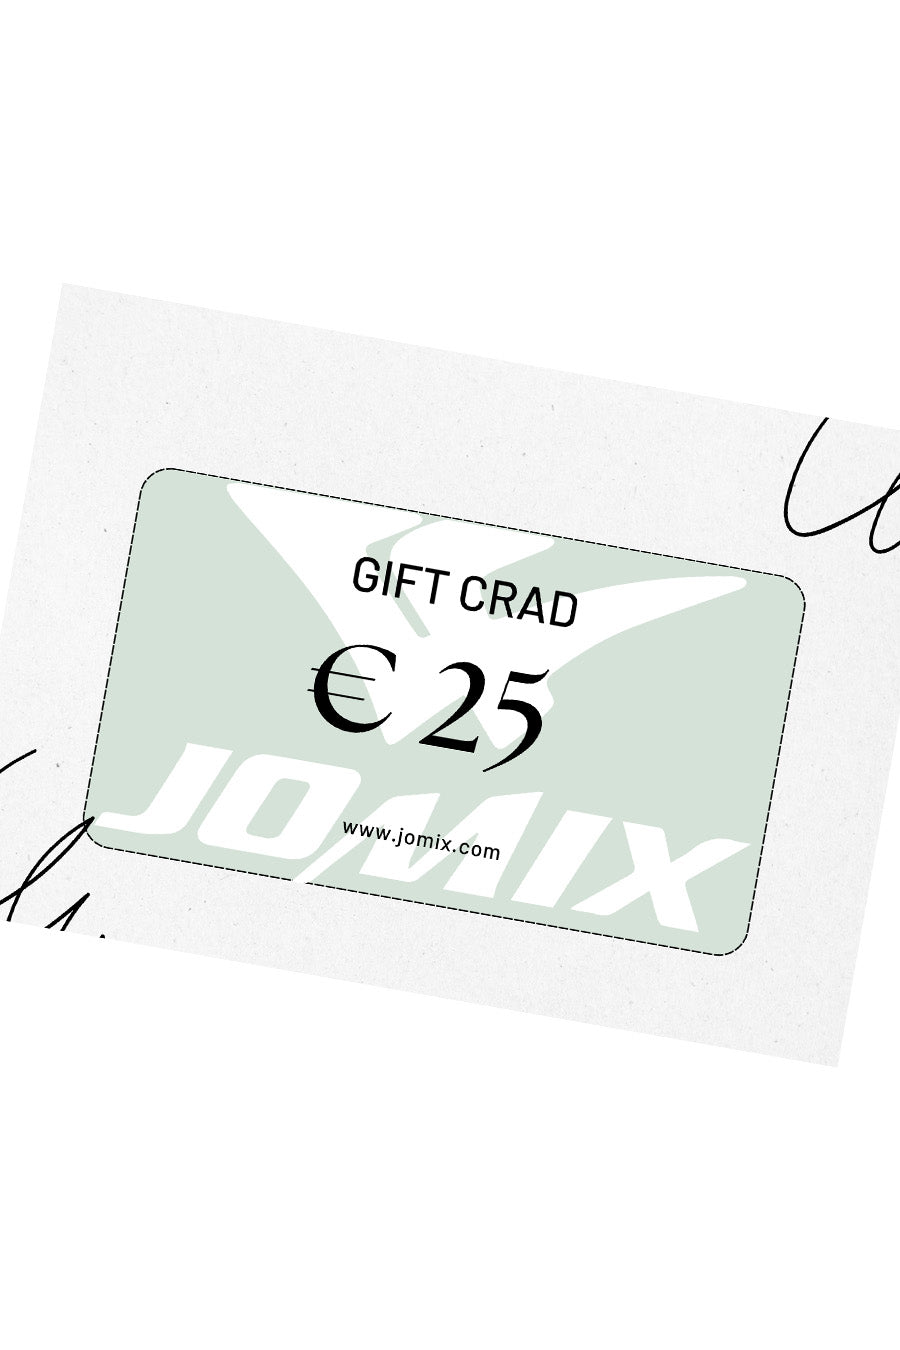 GIFT CARD JOMIX